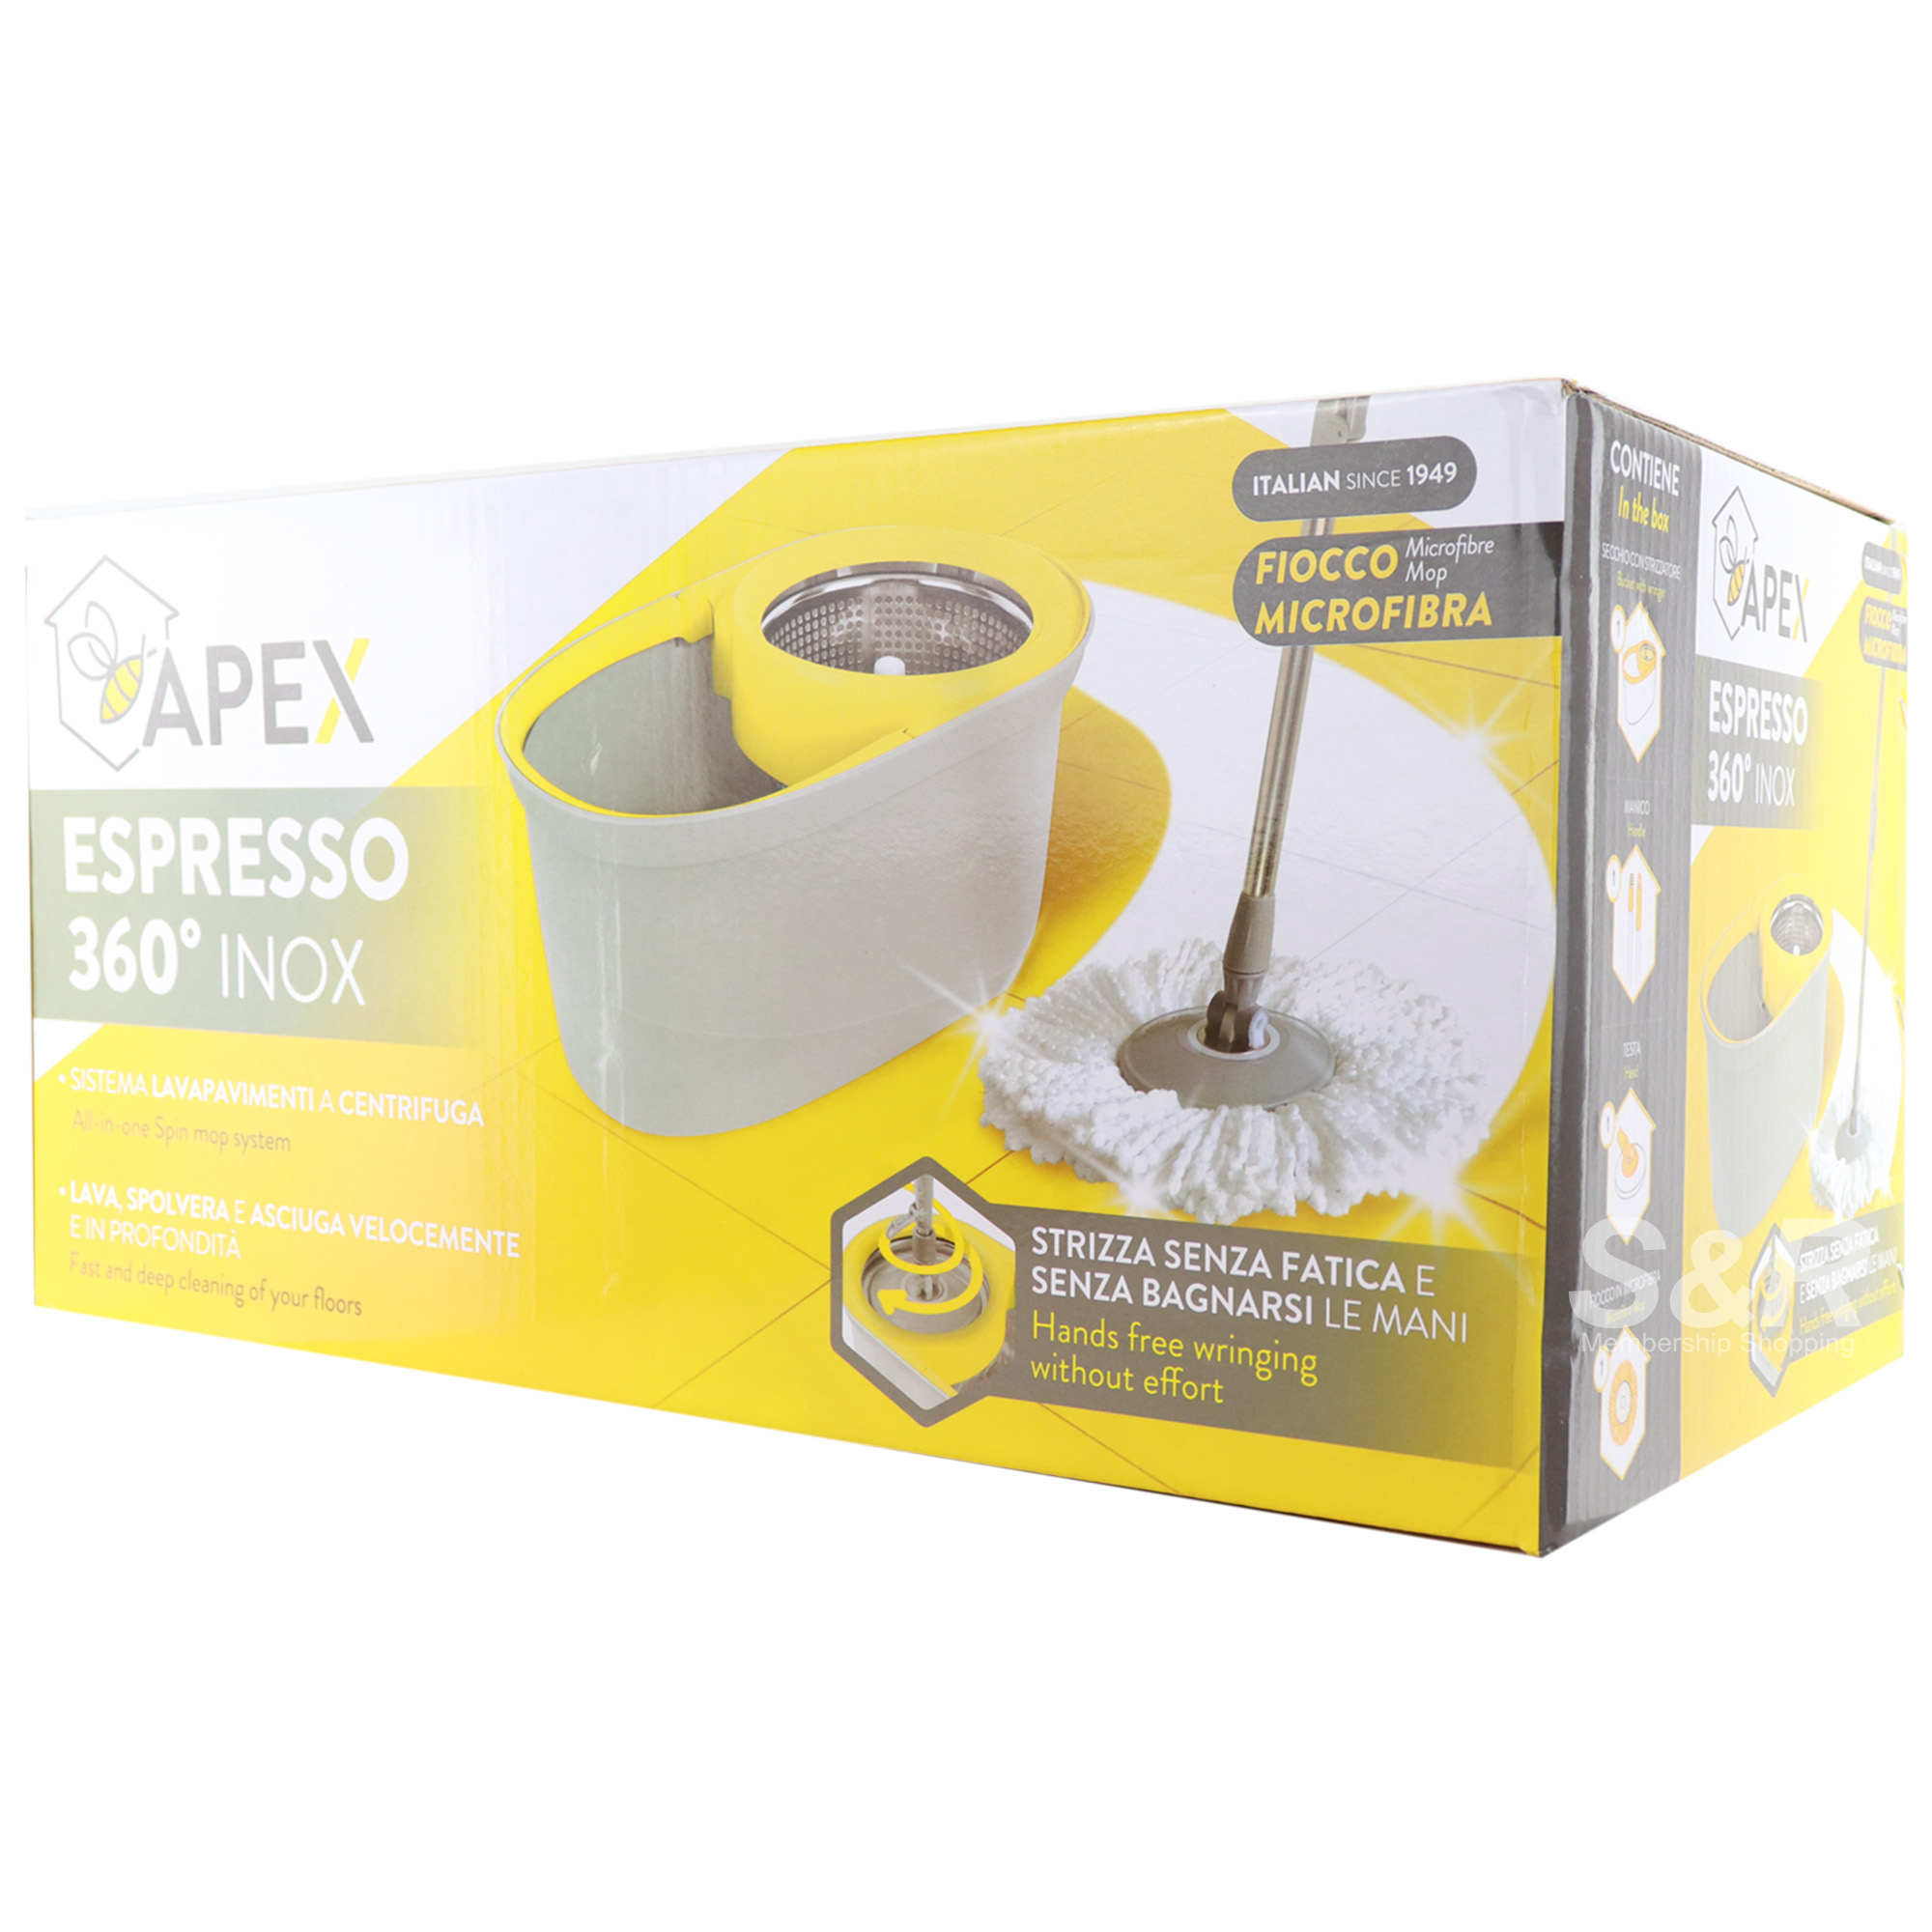 Apex Espresso